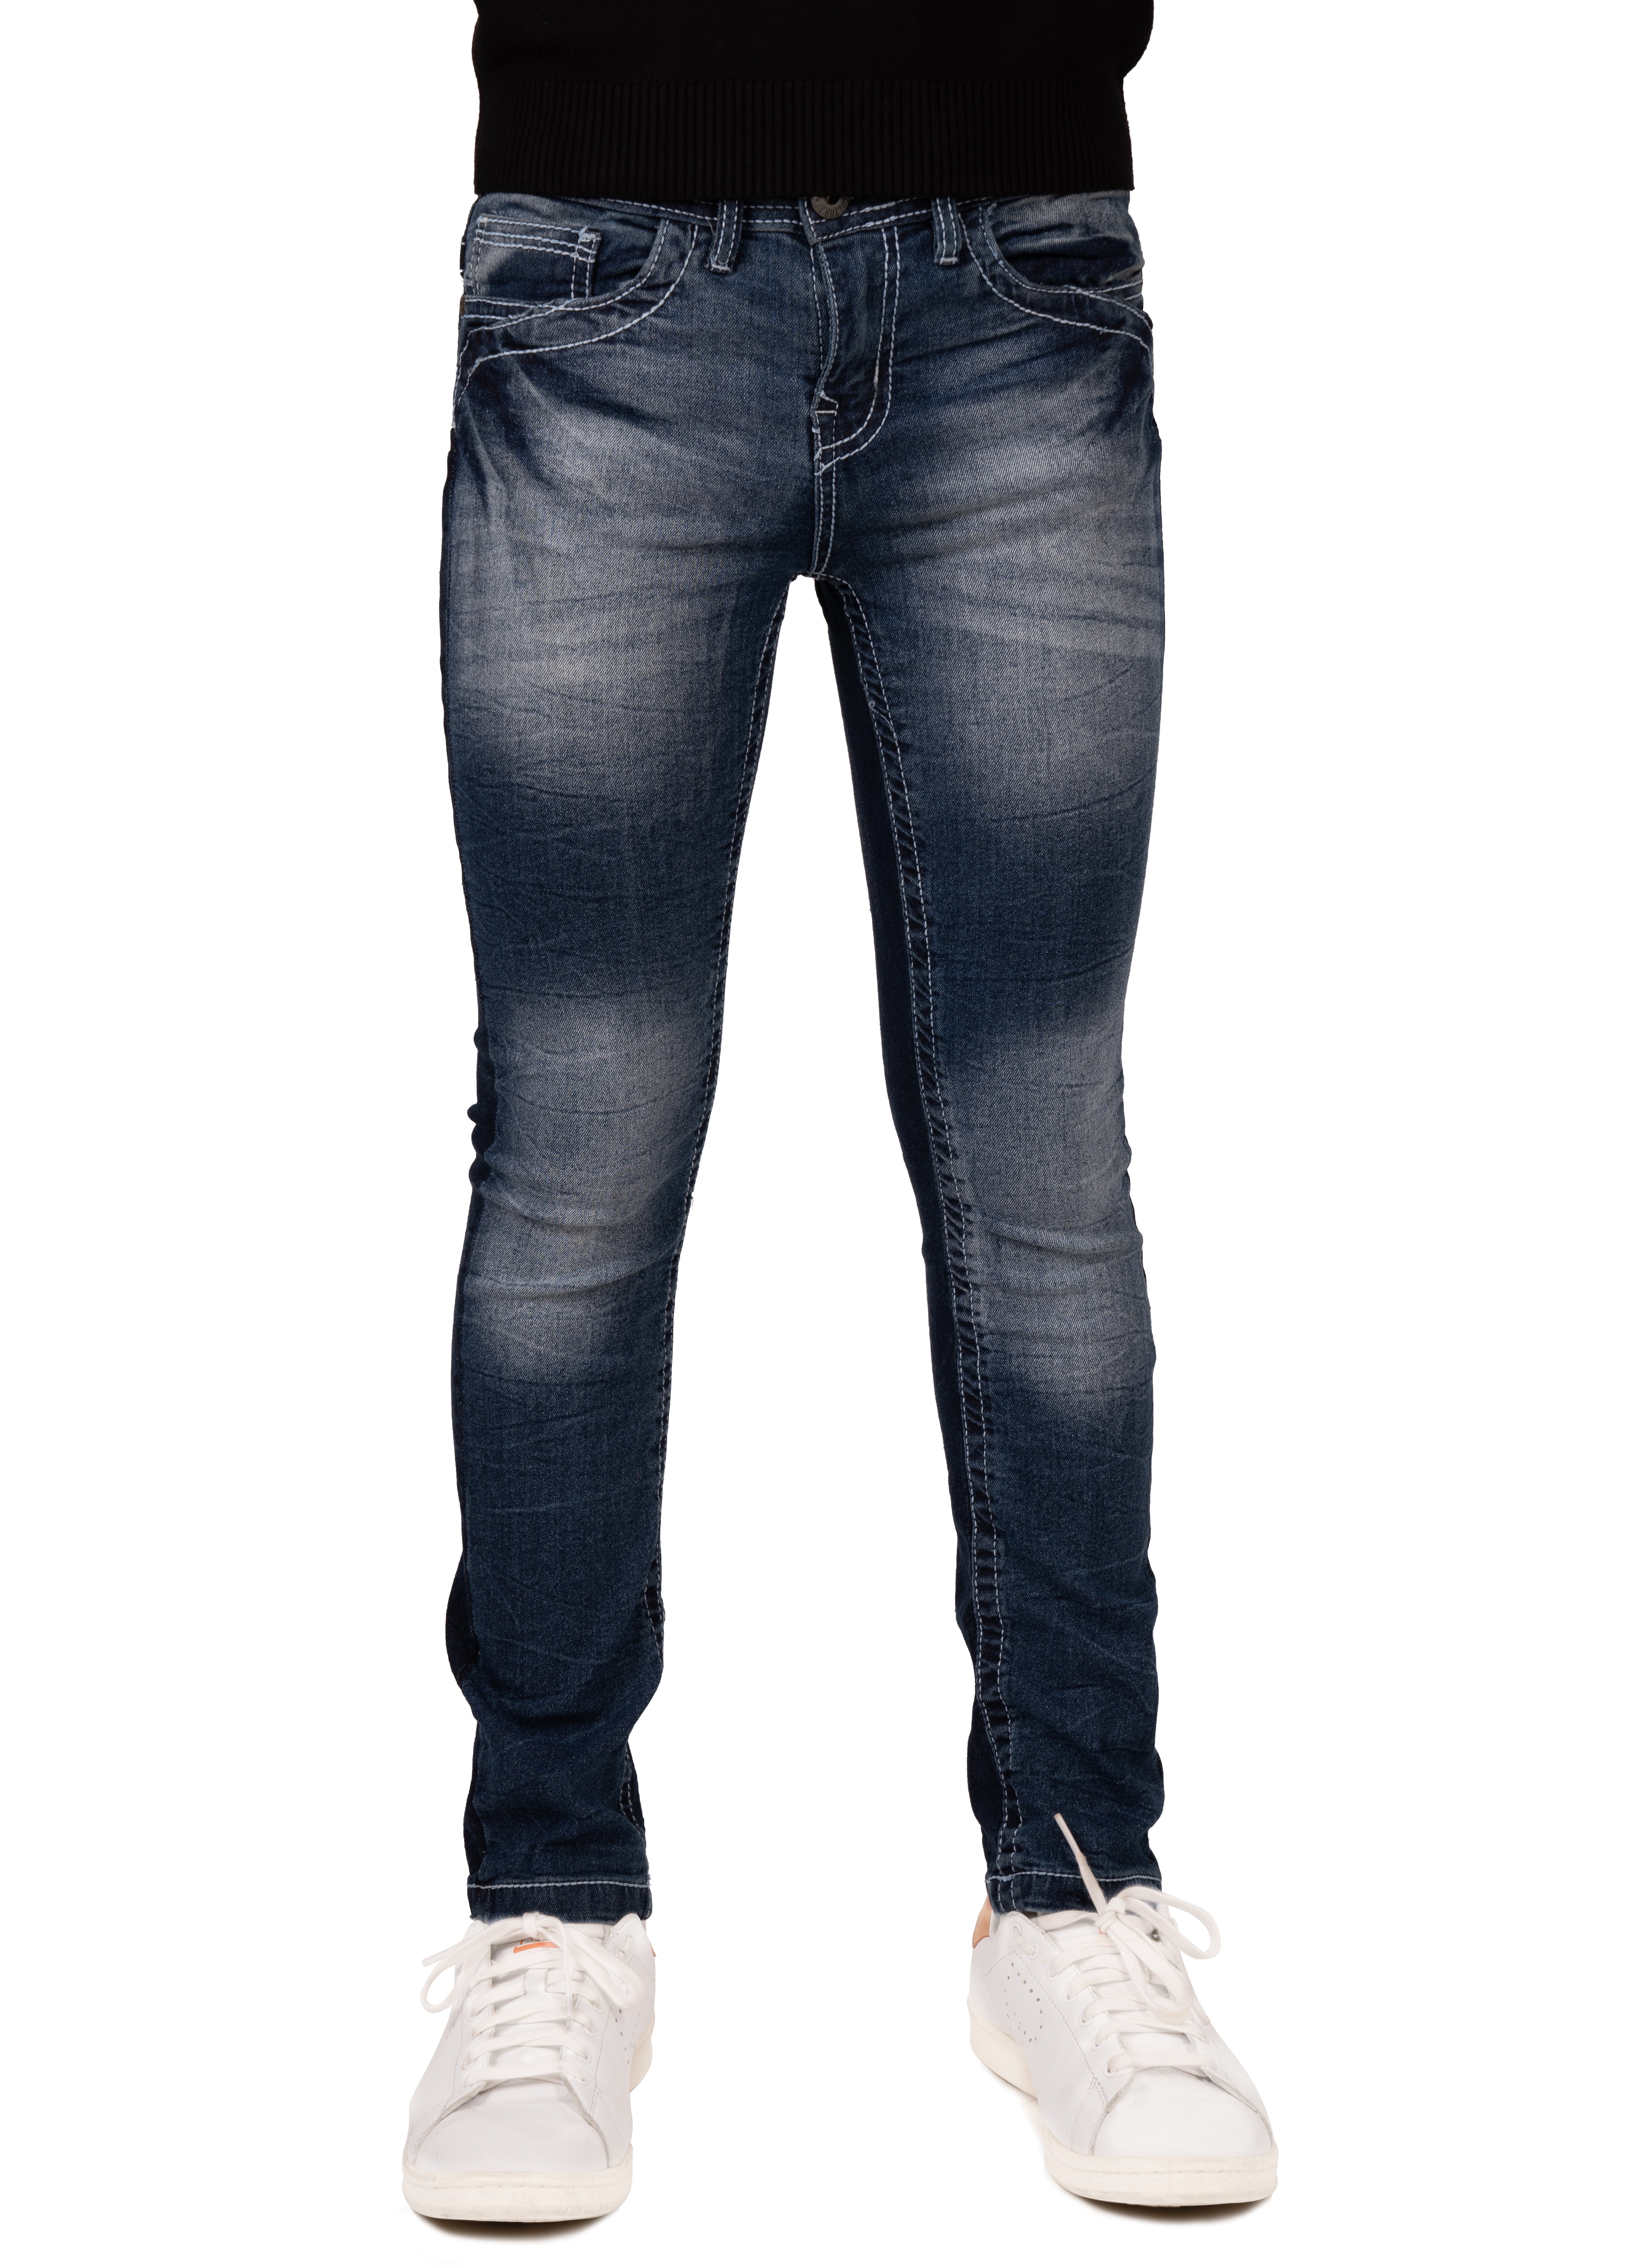 Wash Jeans Stitch, Pants, Comfy Age CULTURA Thick Boys for Skinny Blue Stretch 3-7, 5 Little Size Denim Slim